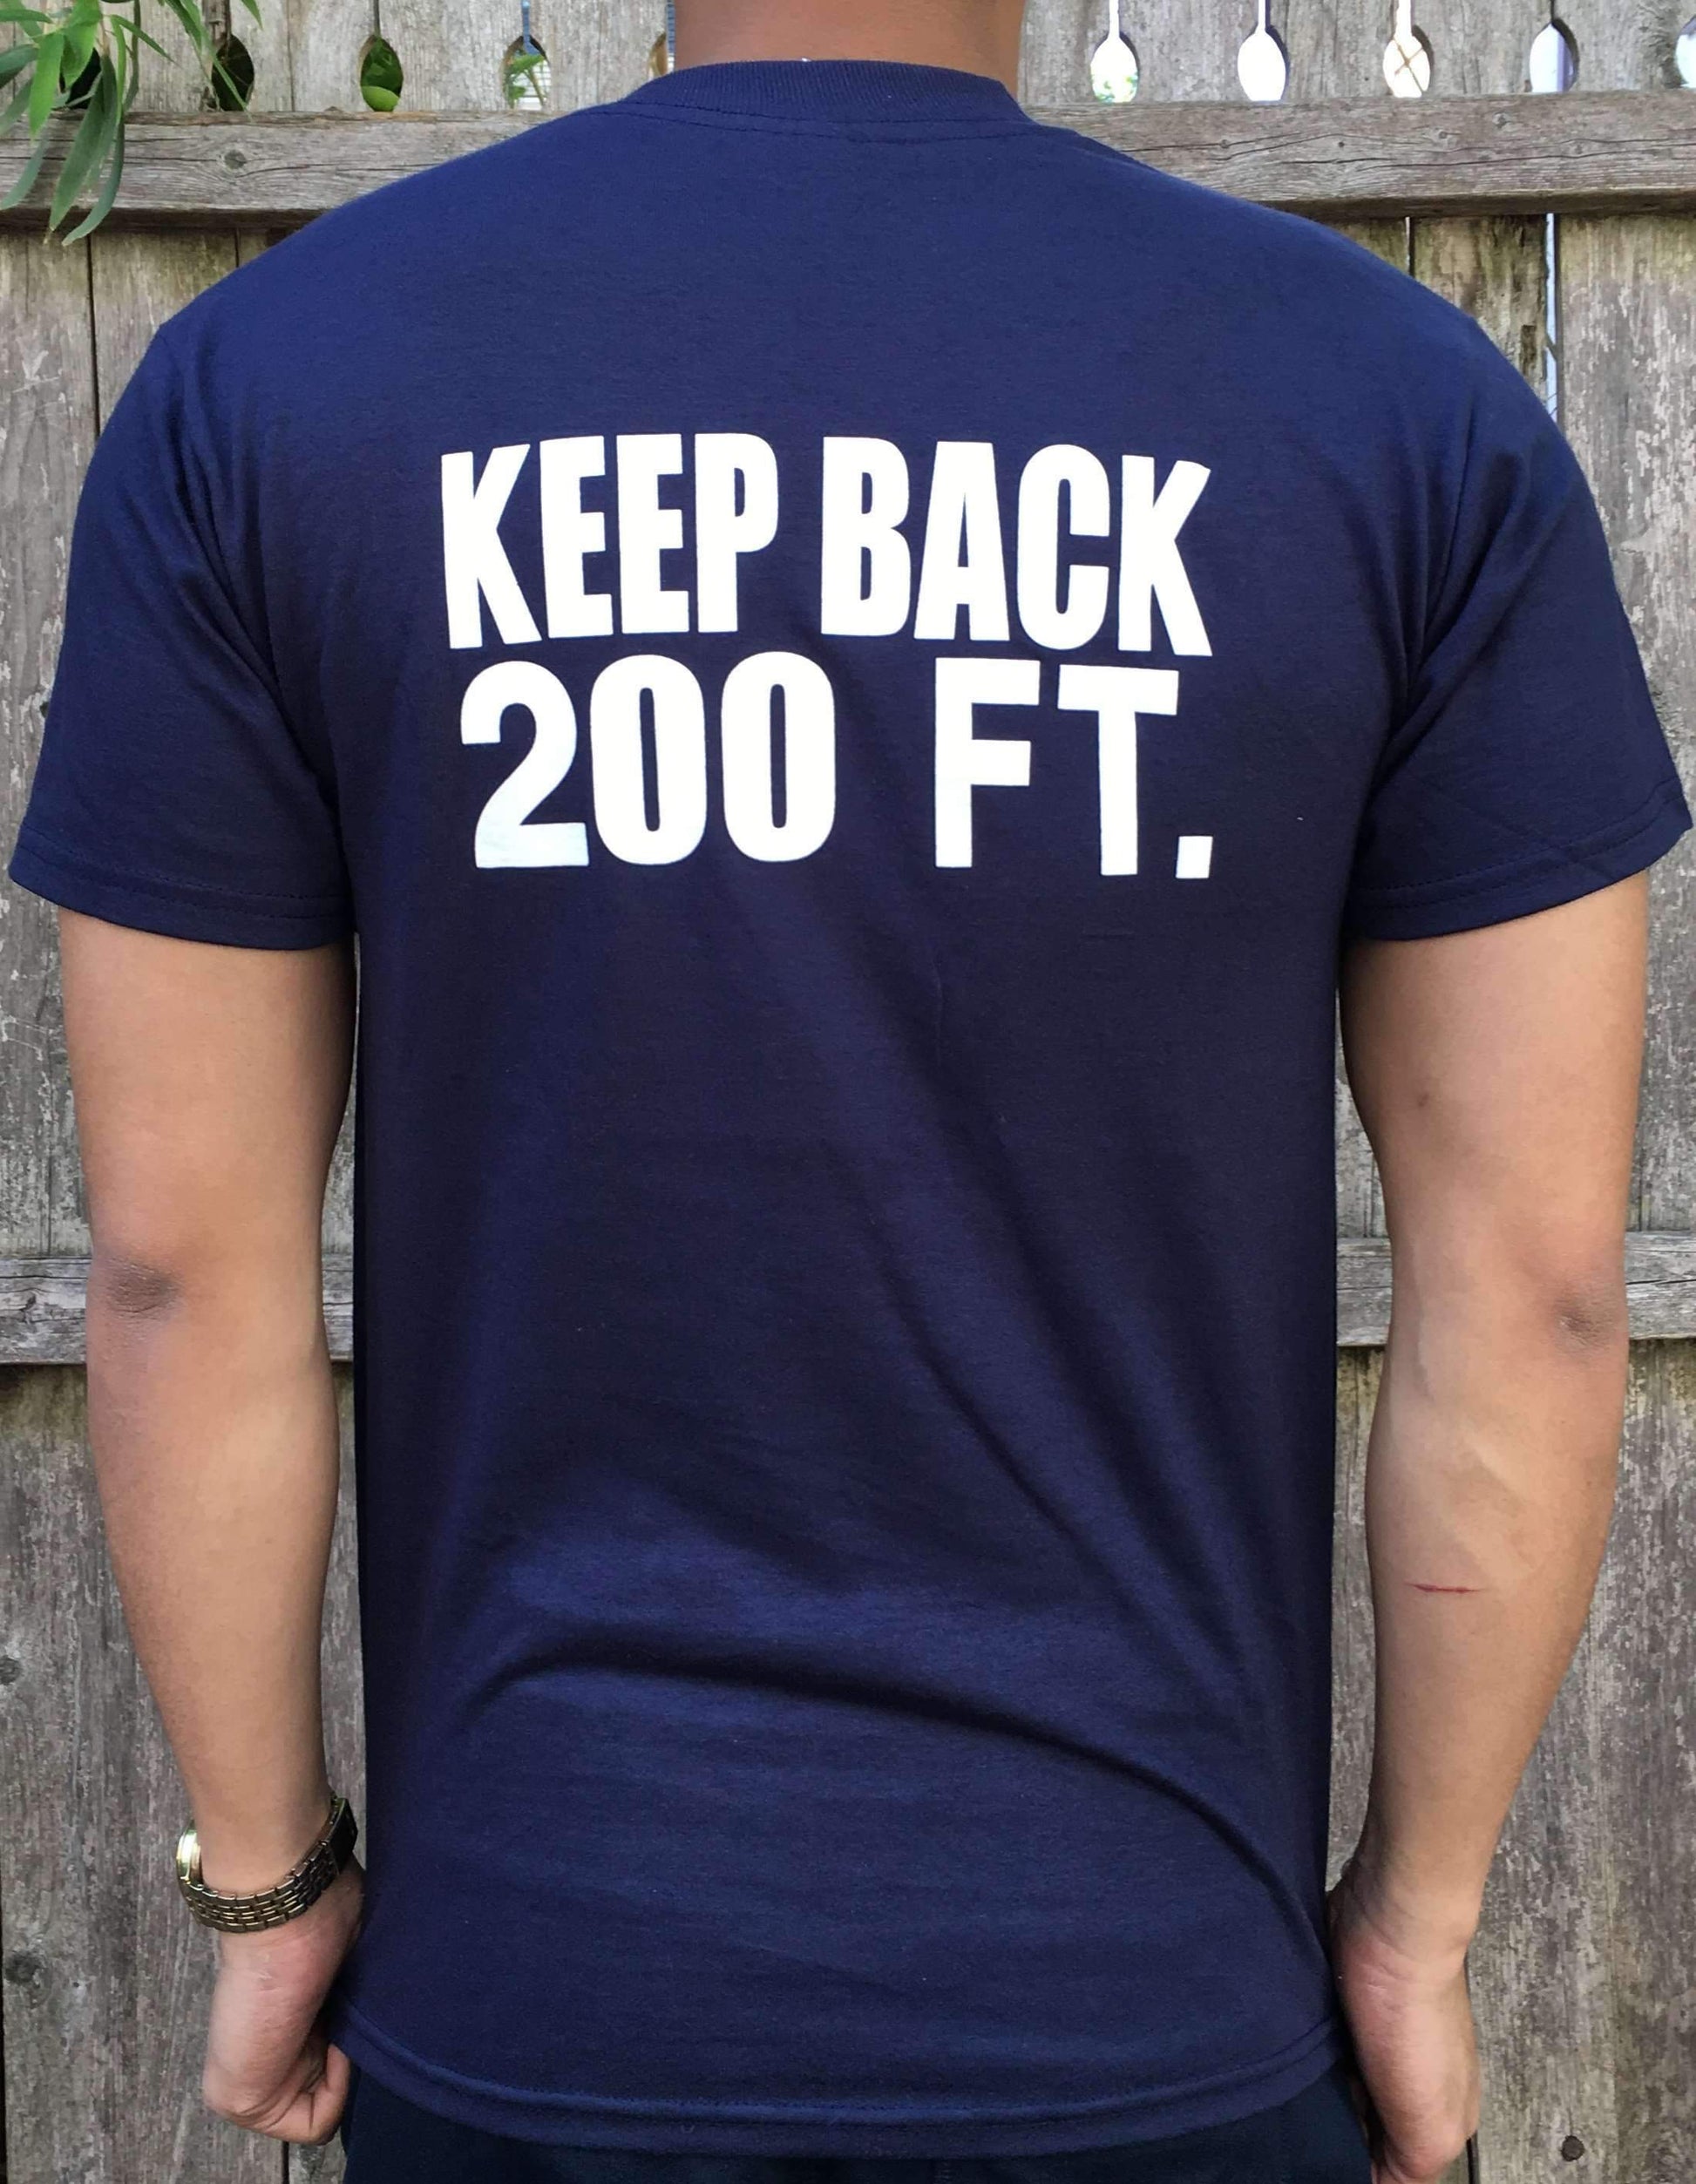  Keep Back 200 Feet Printed ShirtFire Department Clothing